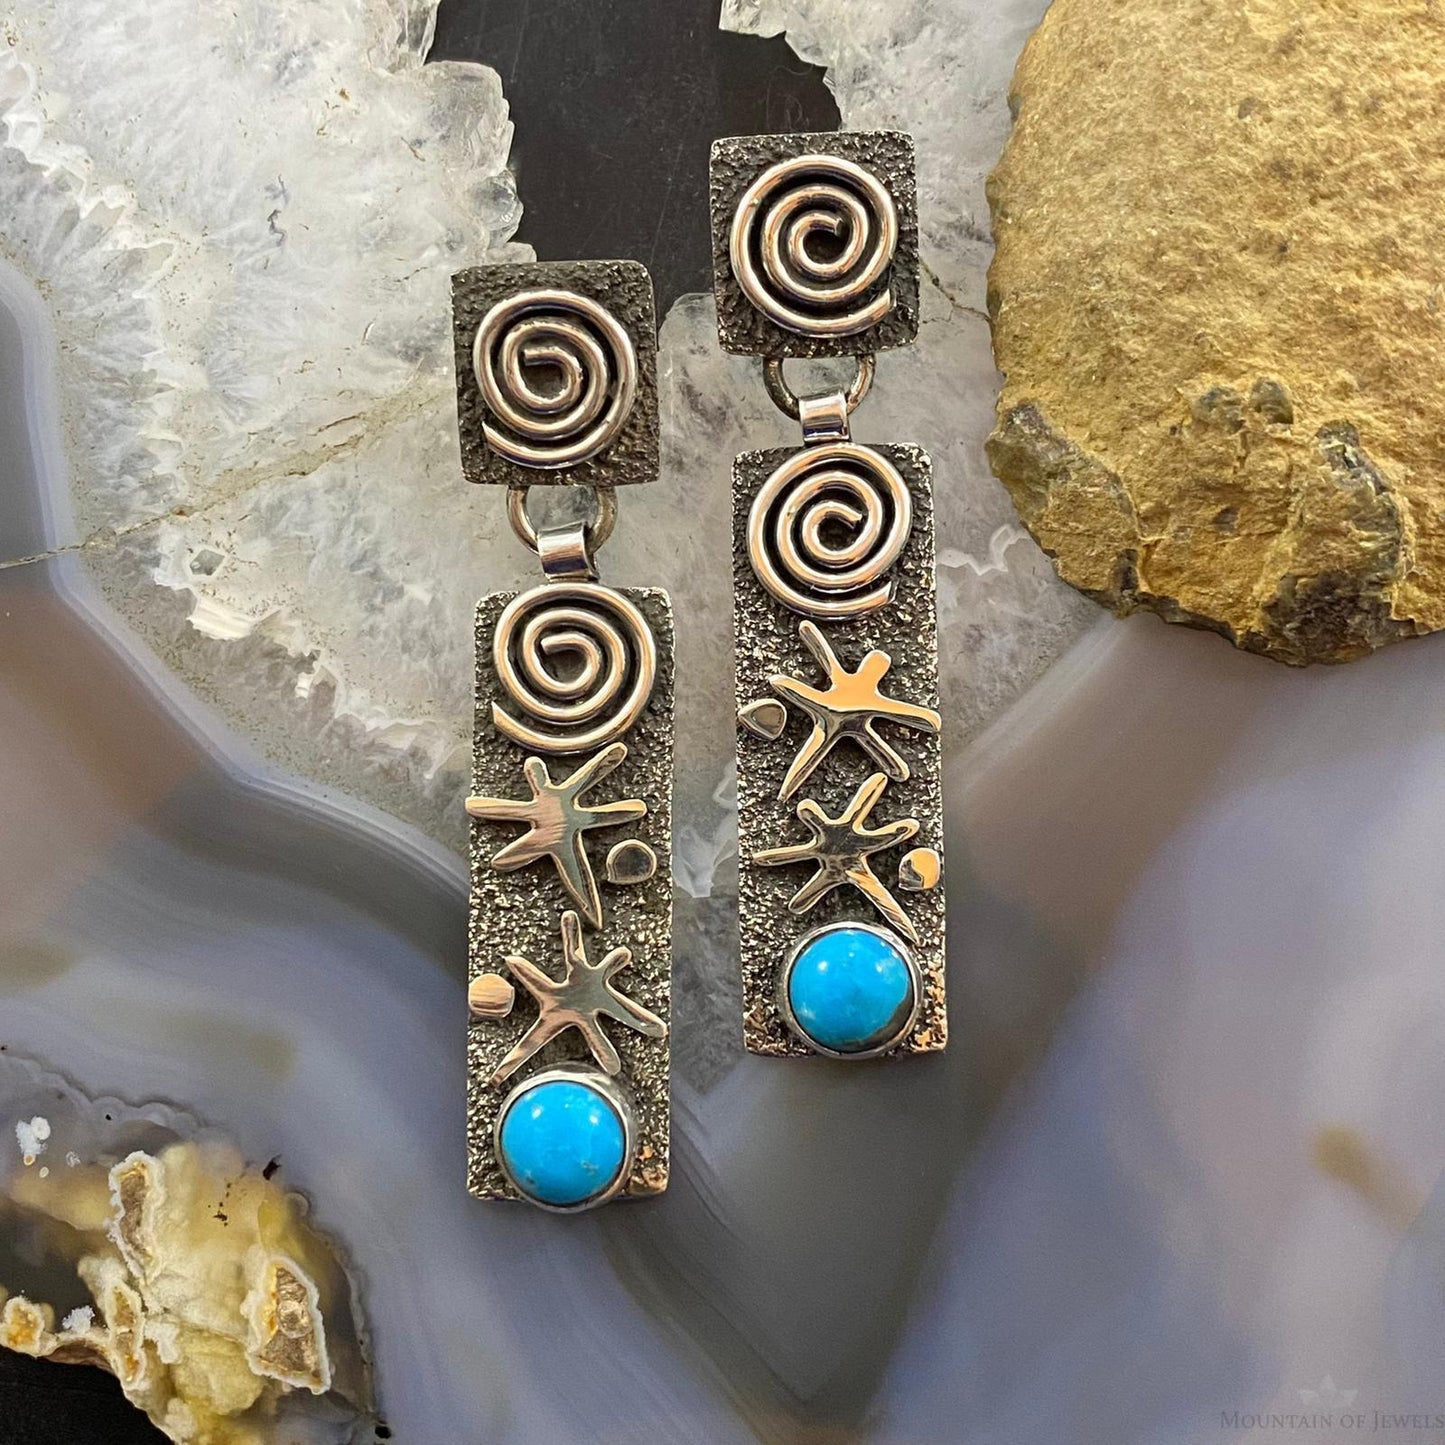 Alex Sanchez Native American Sterling Silver Turquoise Petroglyph Earrings